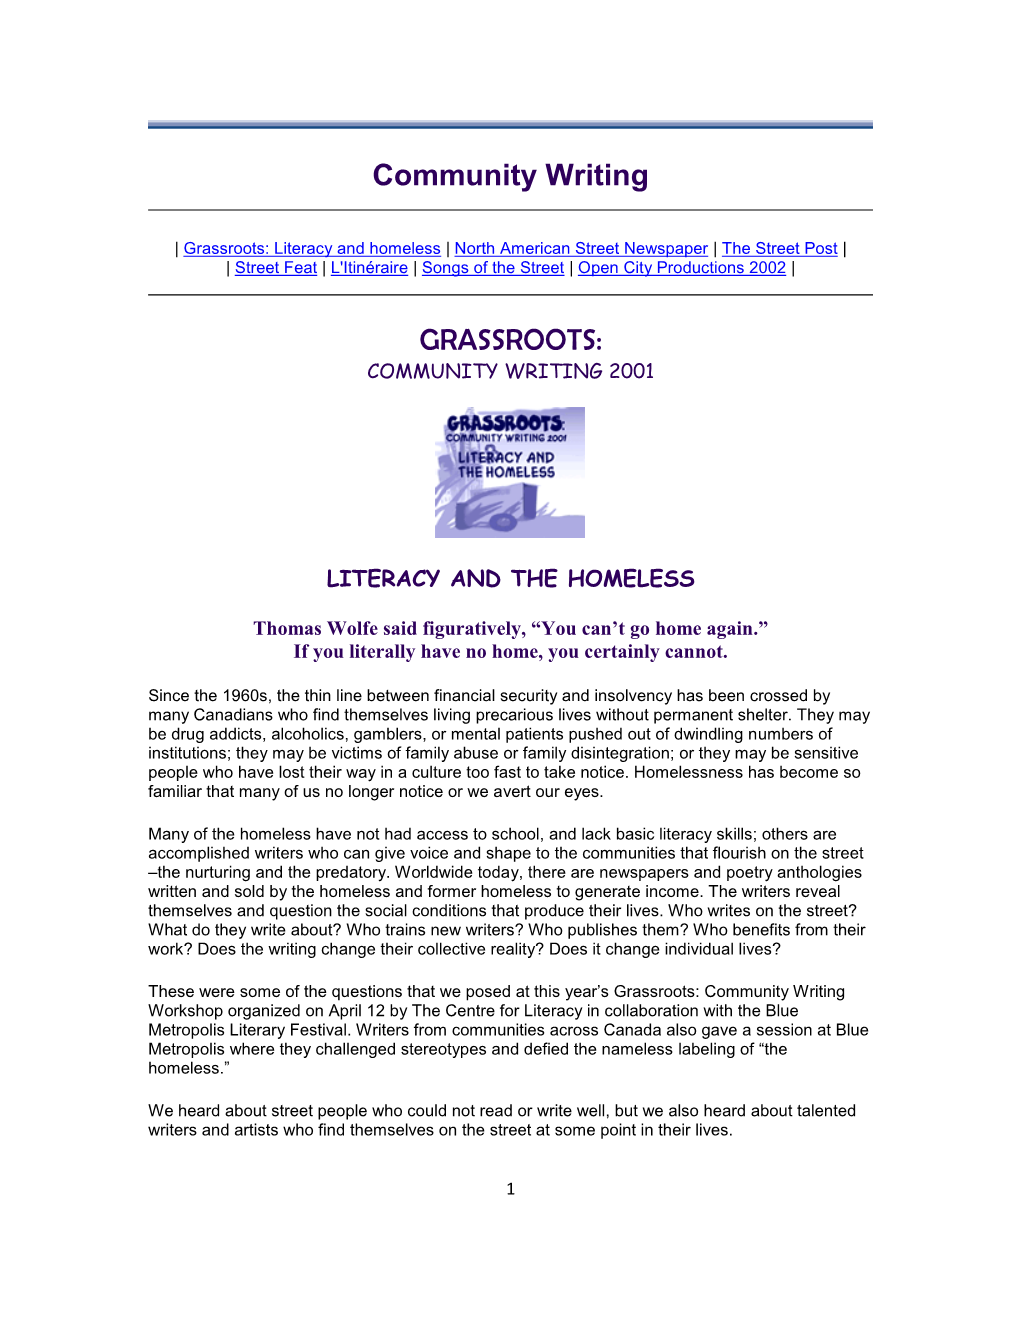 Community Writing GRASSROOTS